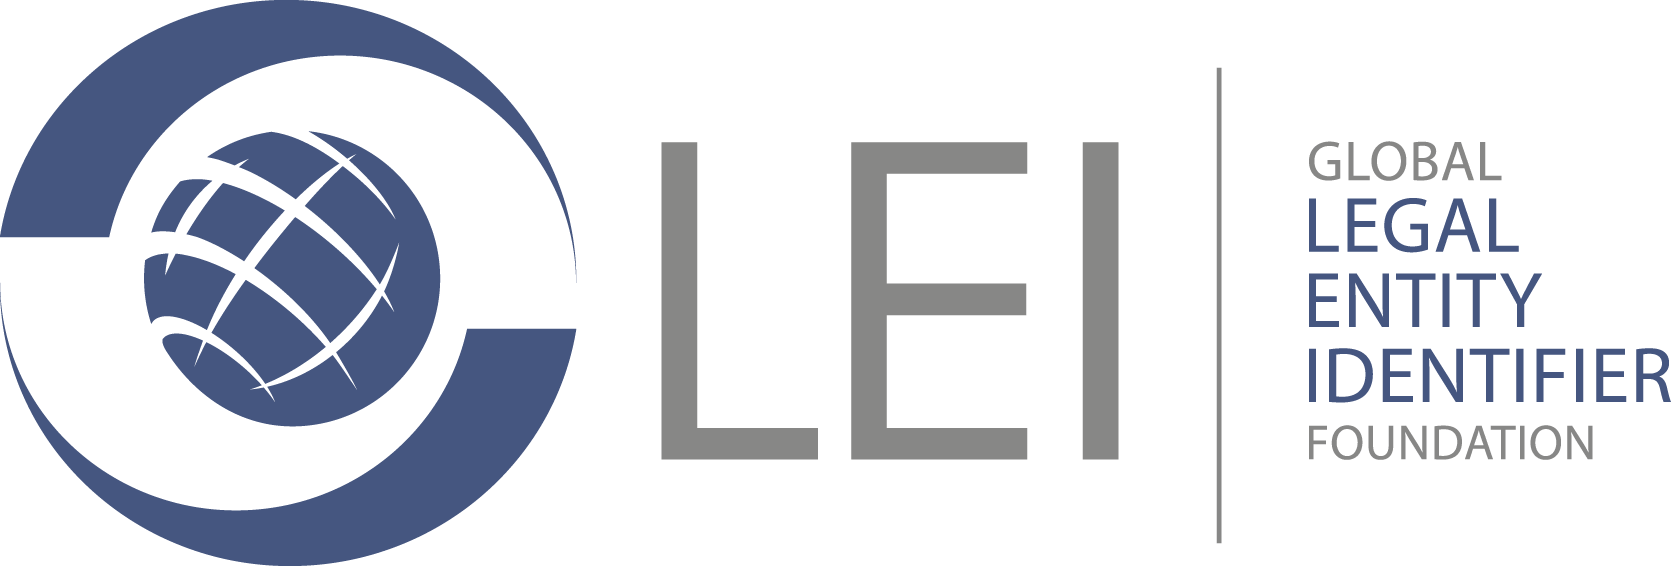 logo-corporate